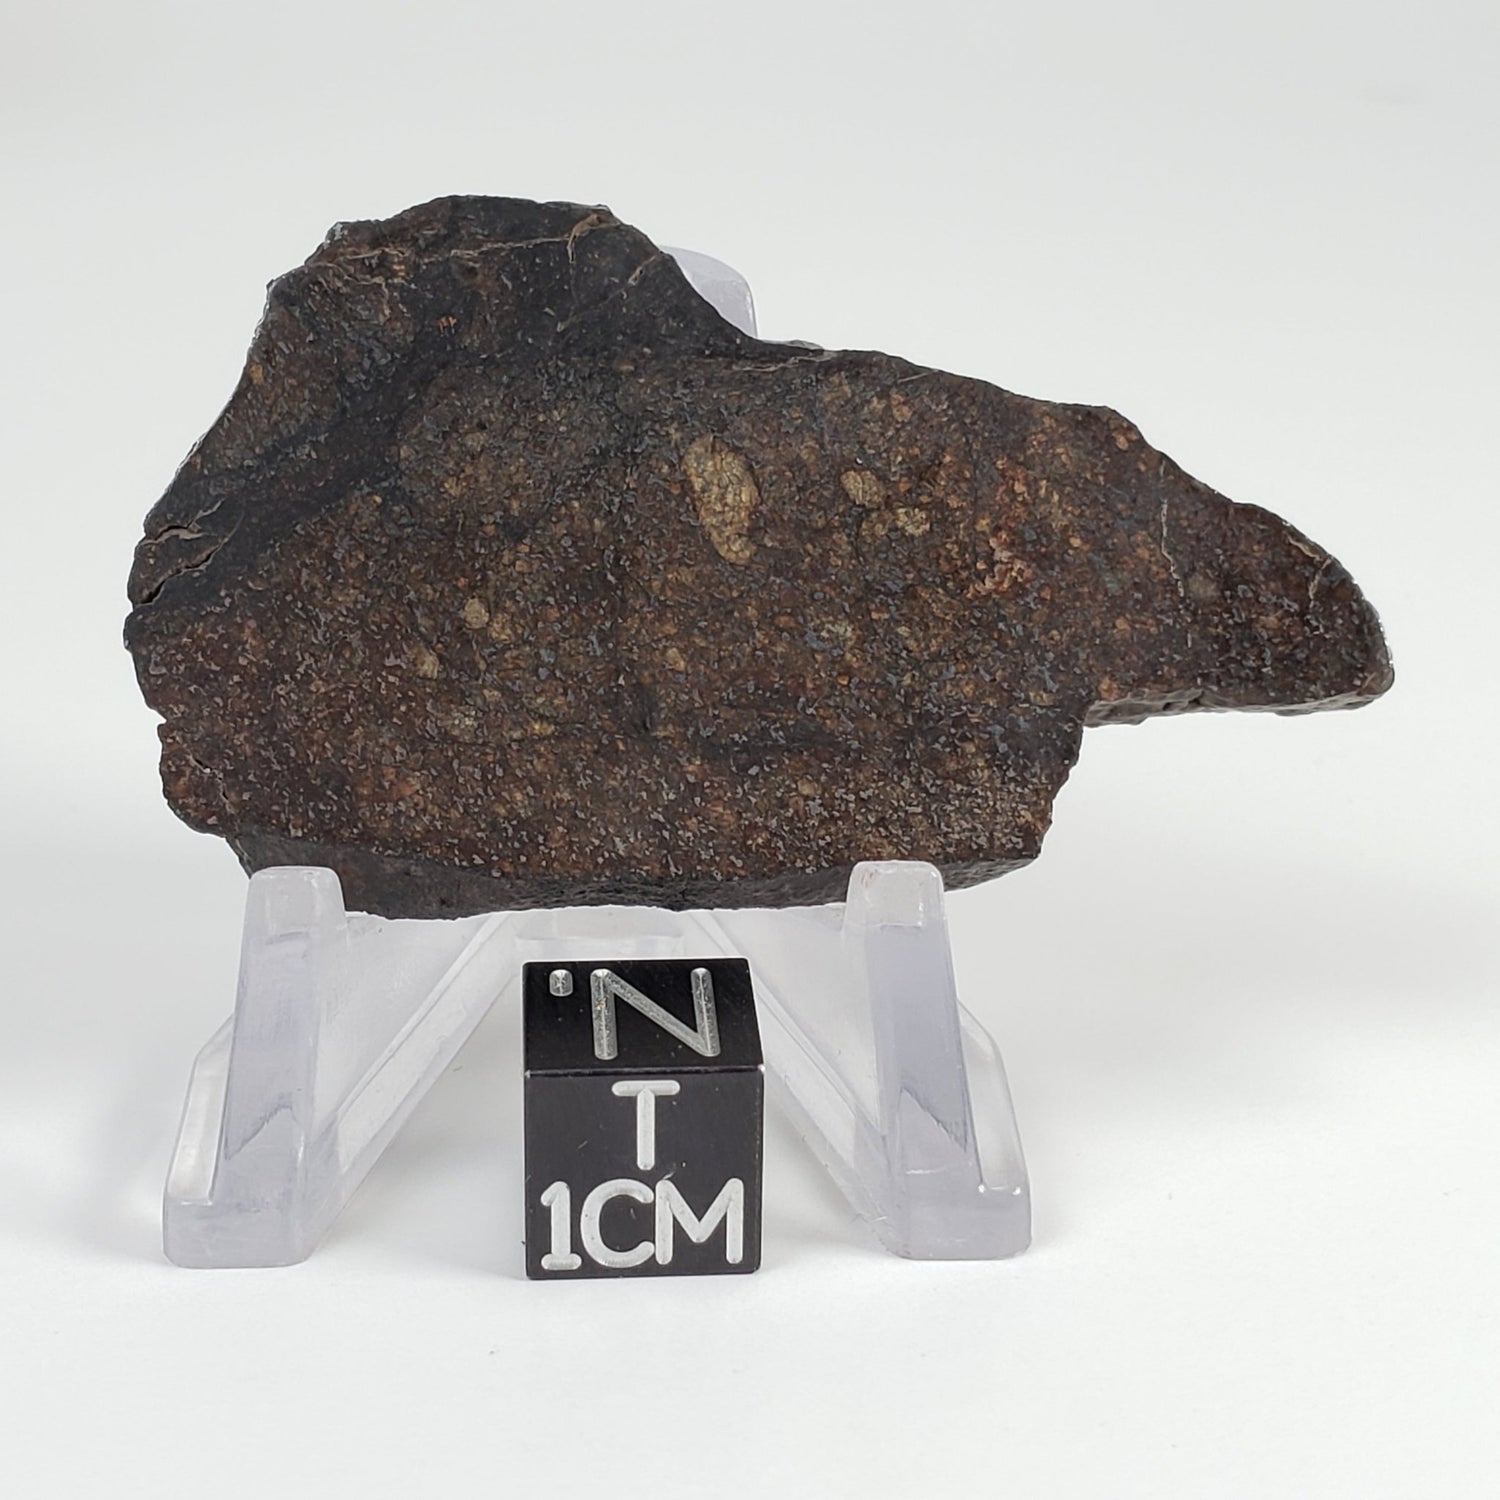 Capot Rey Meteorite | 15.88gr | Full Slice | H5 Chondrules | Found 2004 in Niger